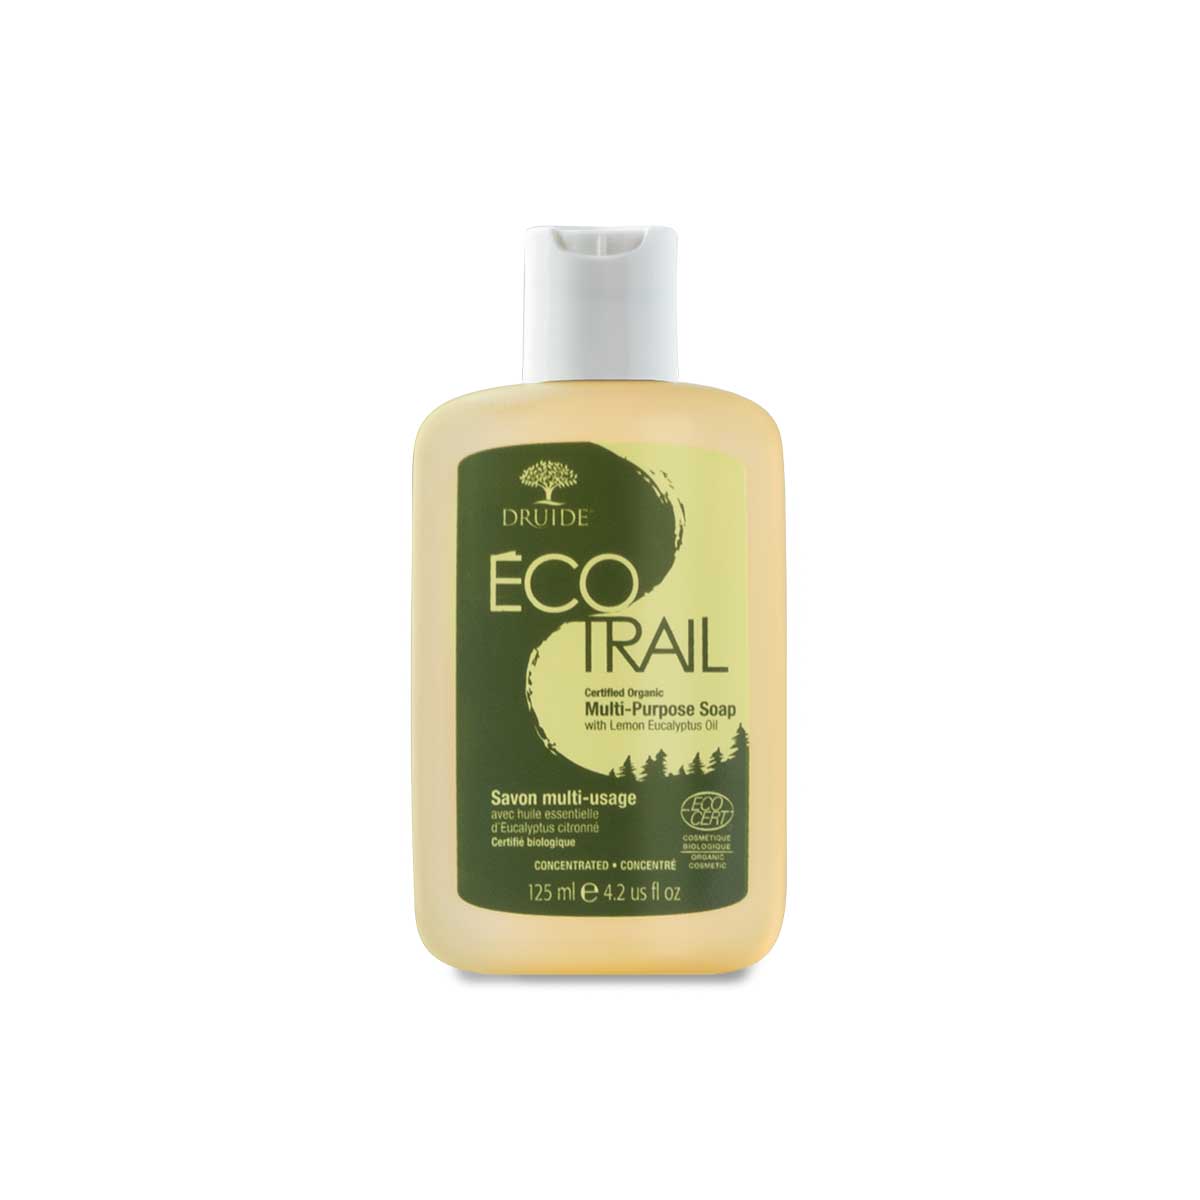 https://druidebio.com/wp-content/uploads/2022/08/druide-body-face-hair-care-ecotrail-outdoor-lemon-eucalyptus-multi-purpose-soap-125ml-bottle.jpg